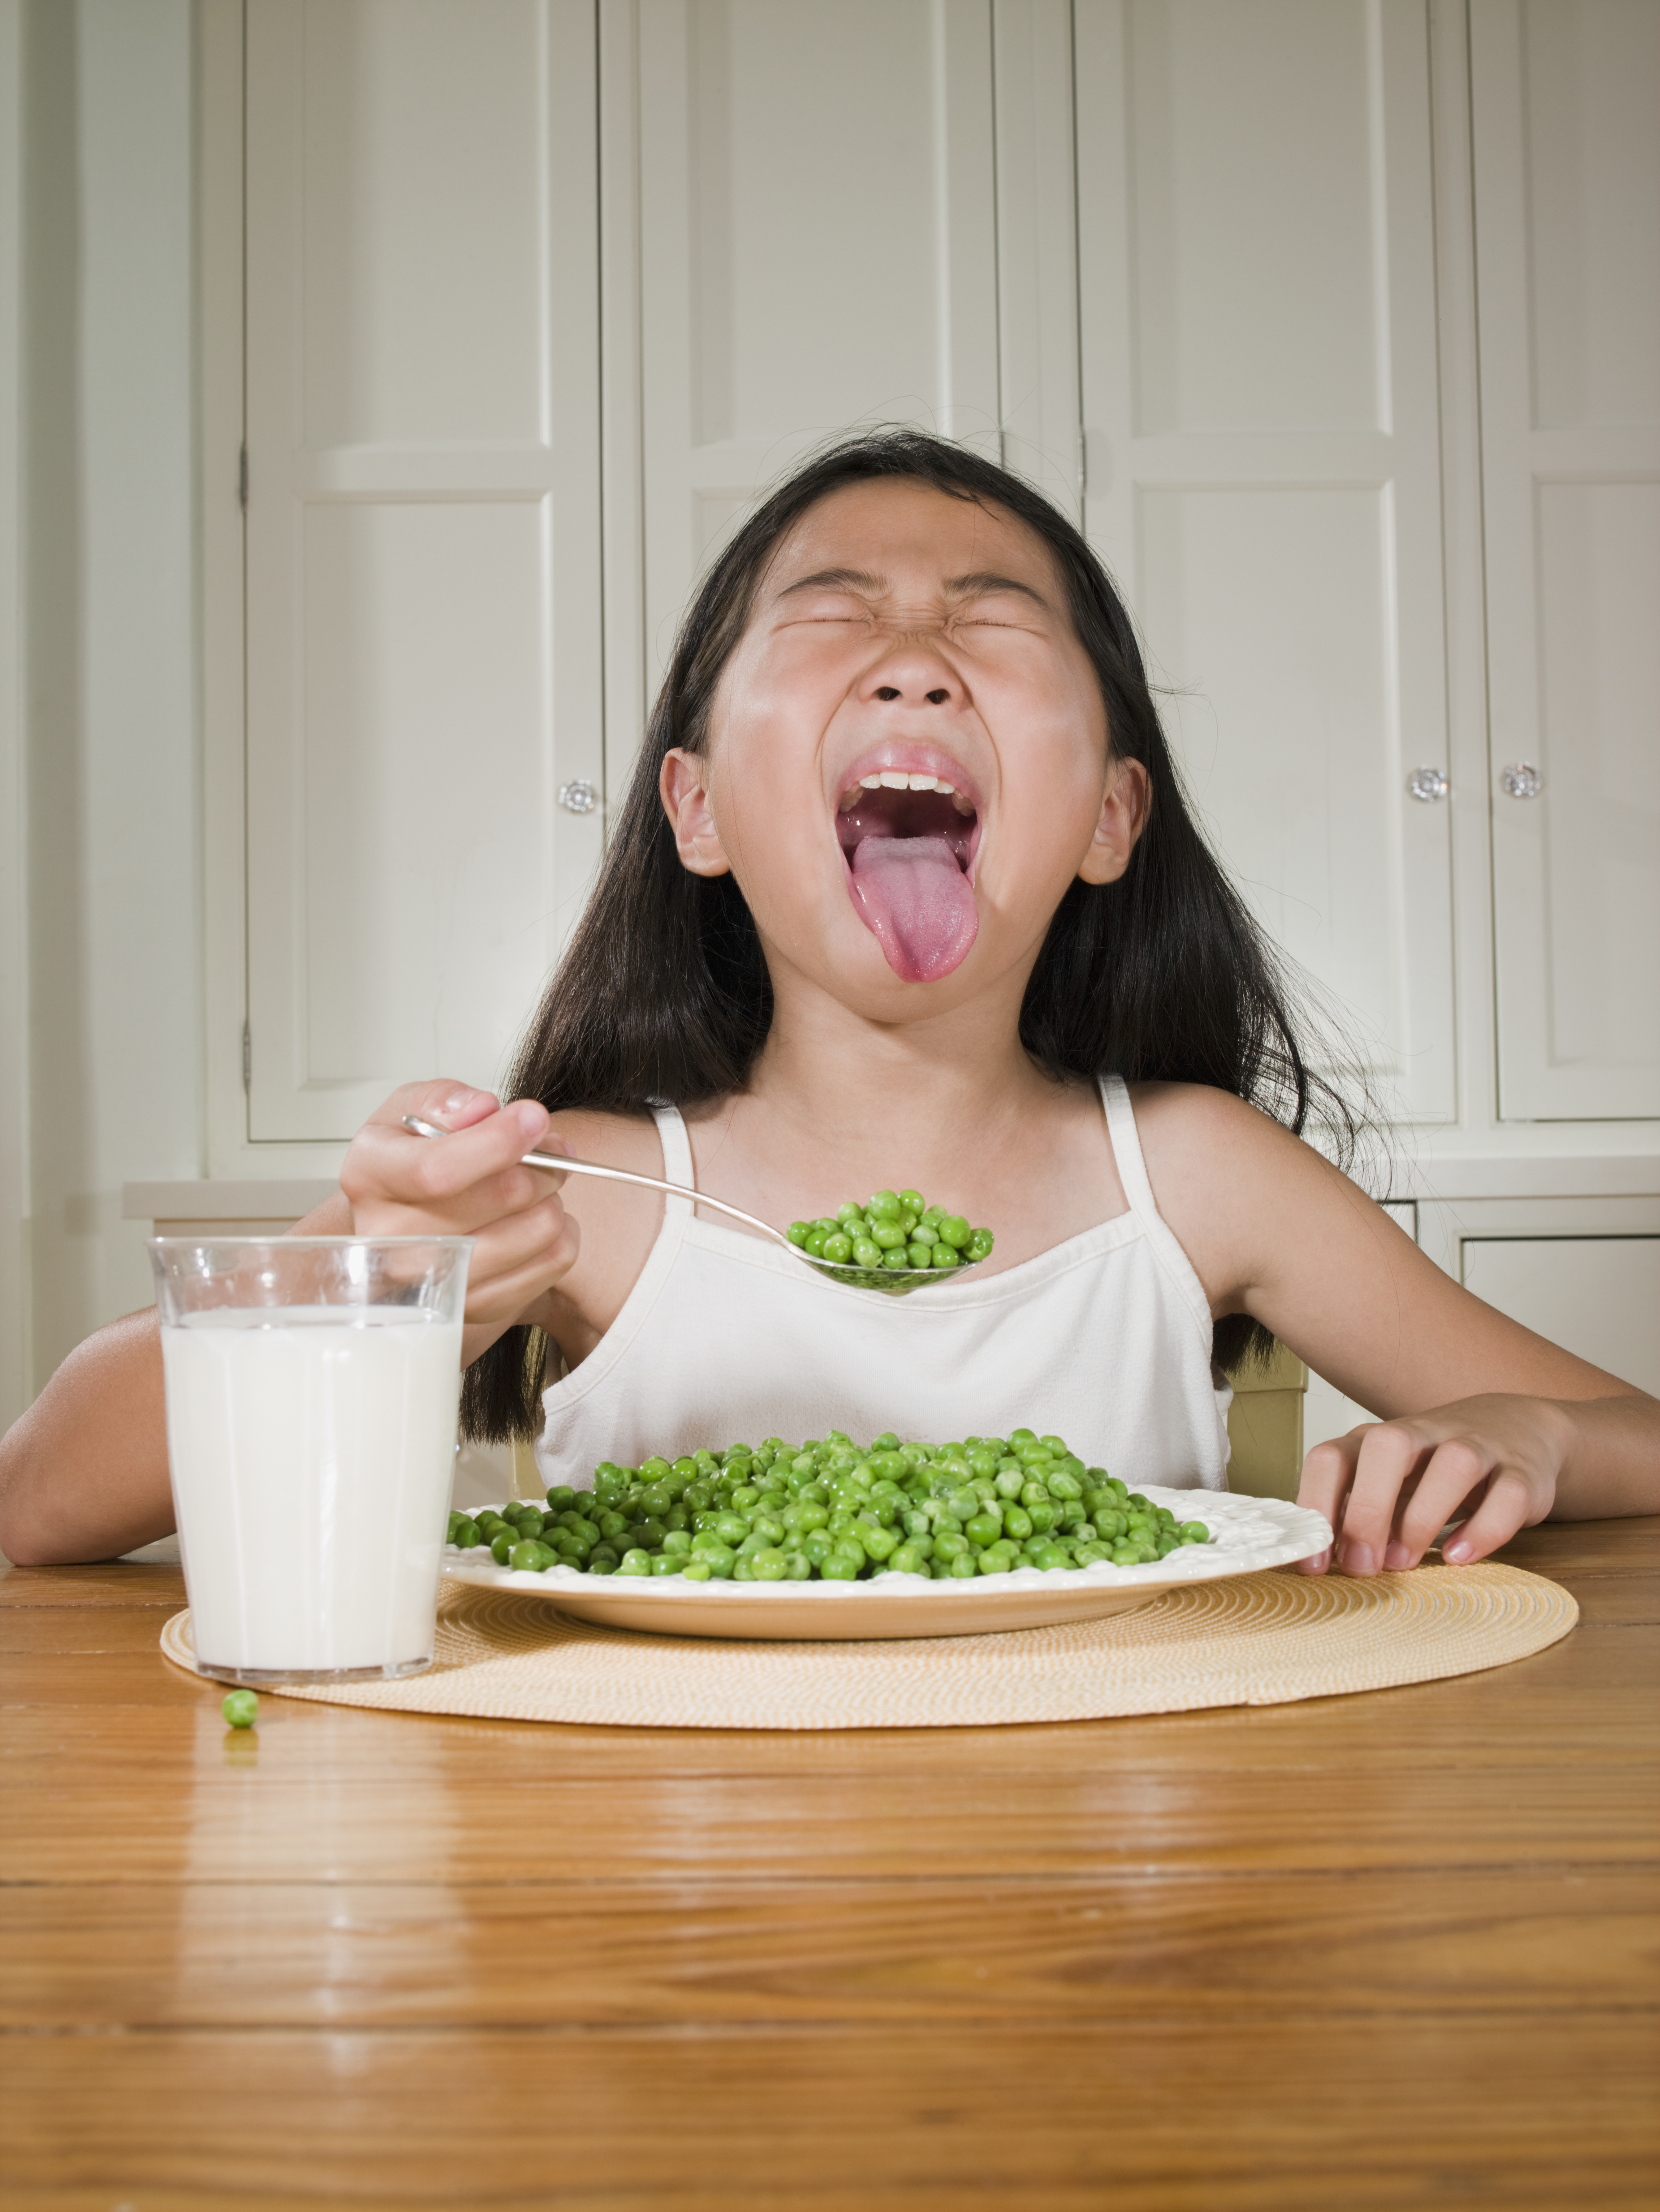 Image: Girl eating peas